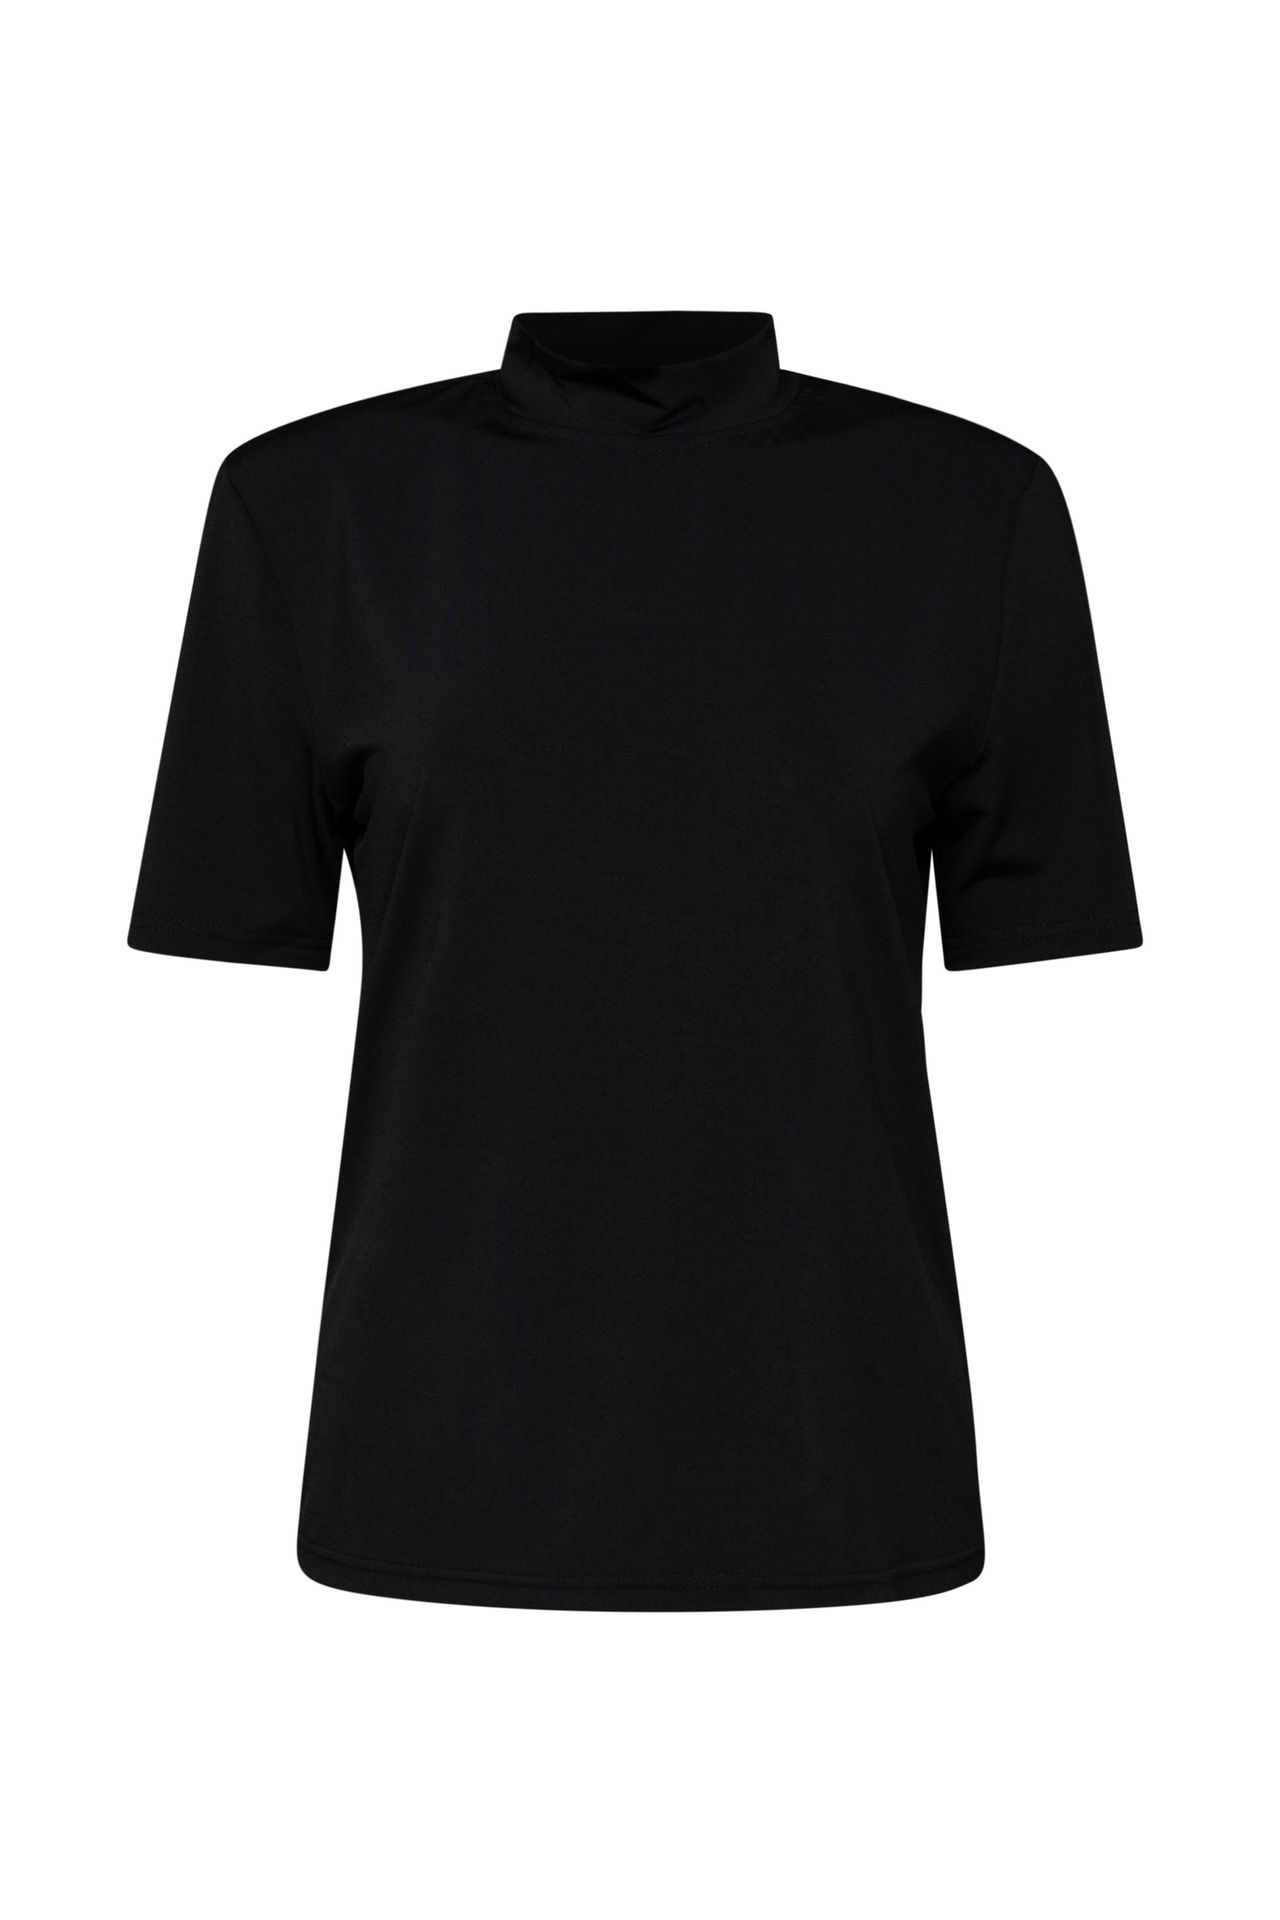 Norah Shirt zwart black 212370-001